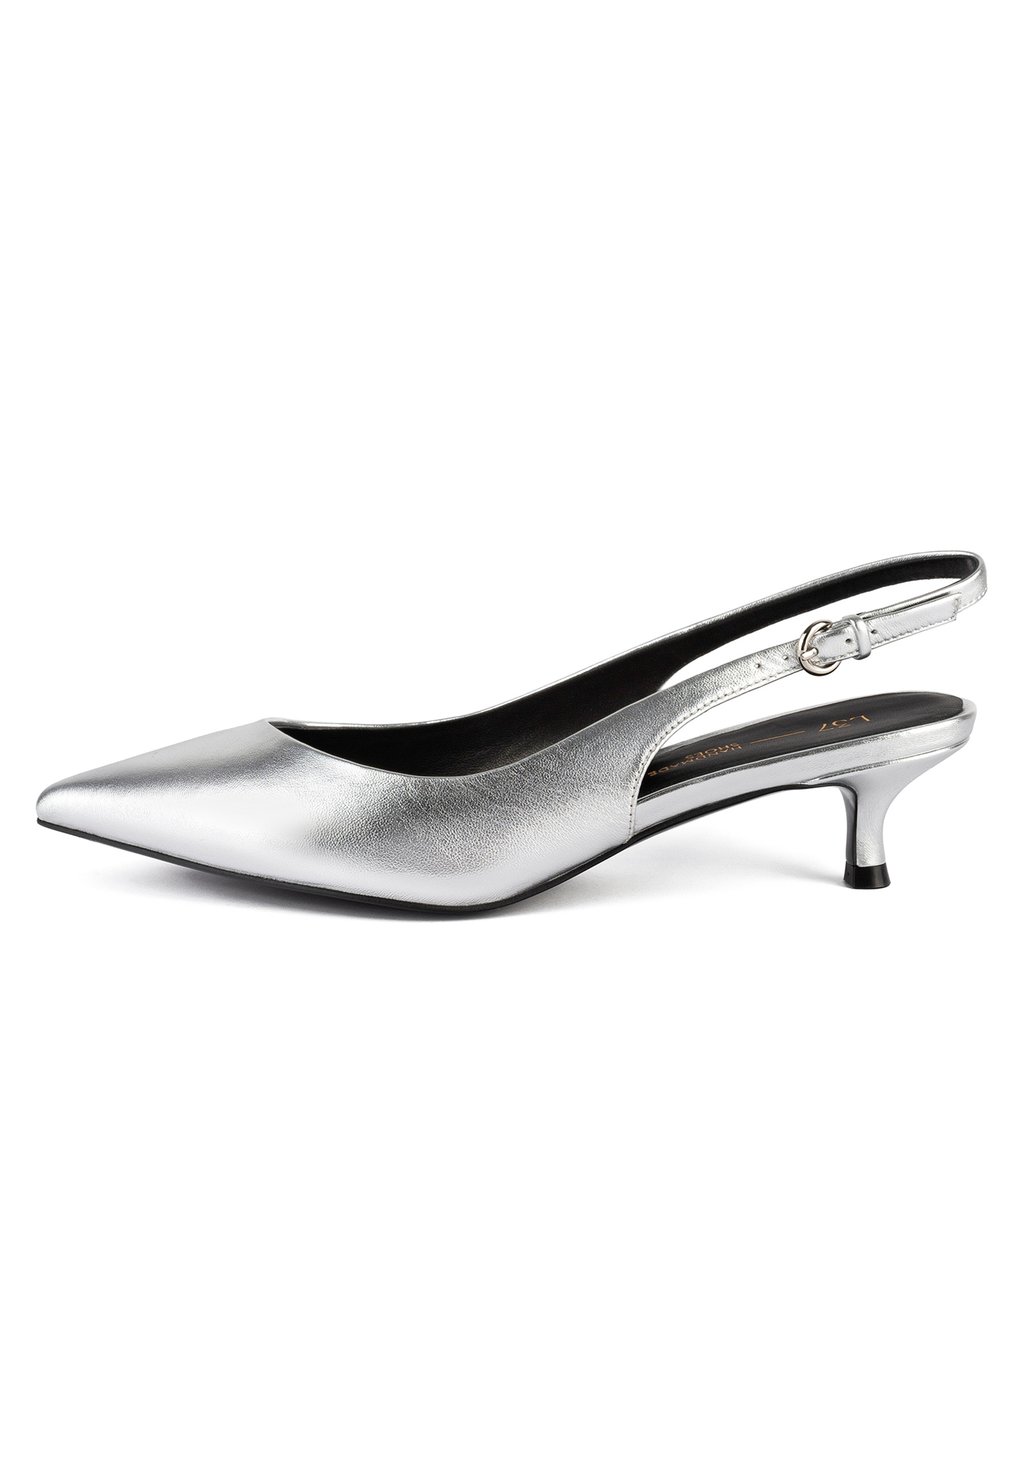 Туфли ELEGANCE L37, цвет silver coloured сандалии с ремешком l37 цвет silver coloured